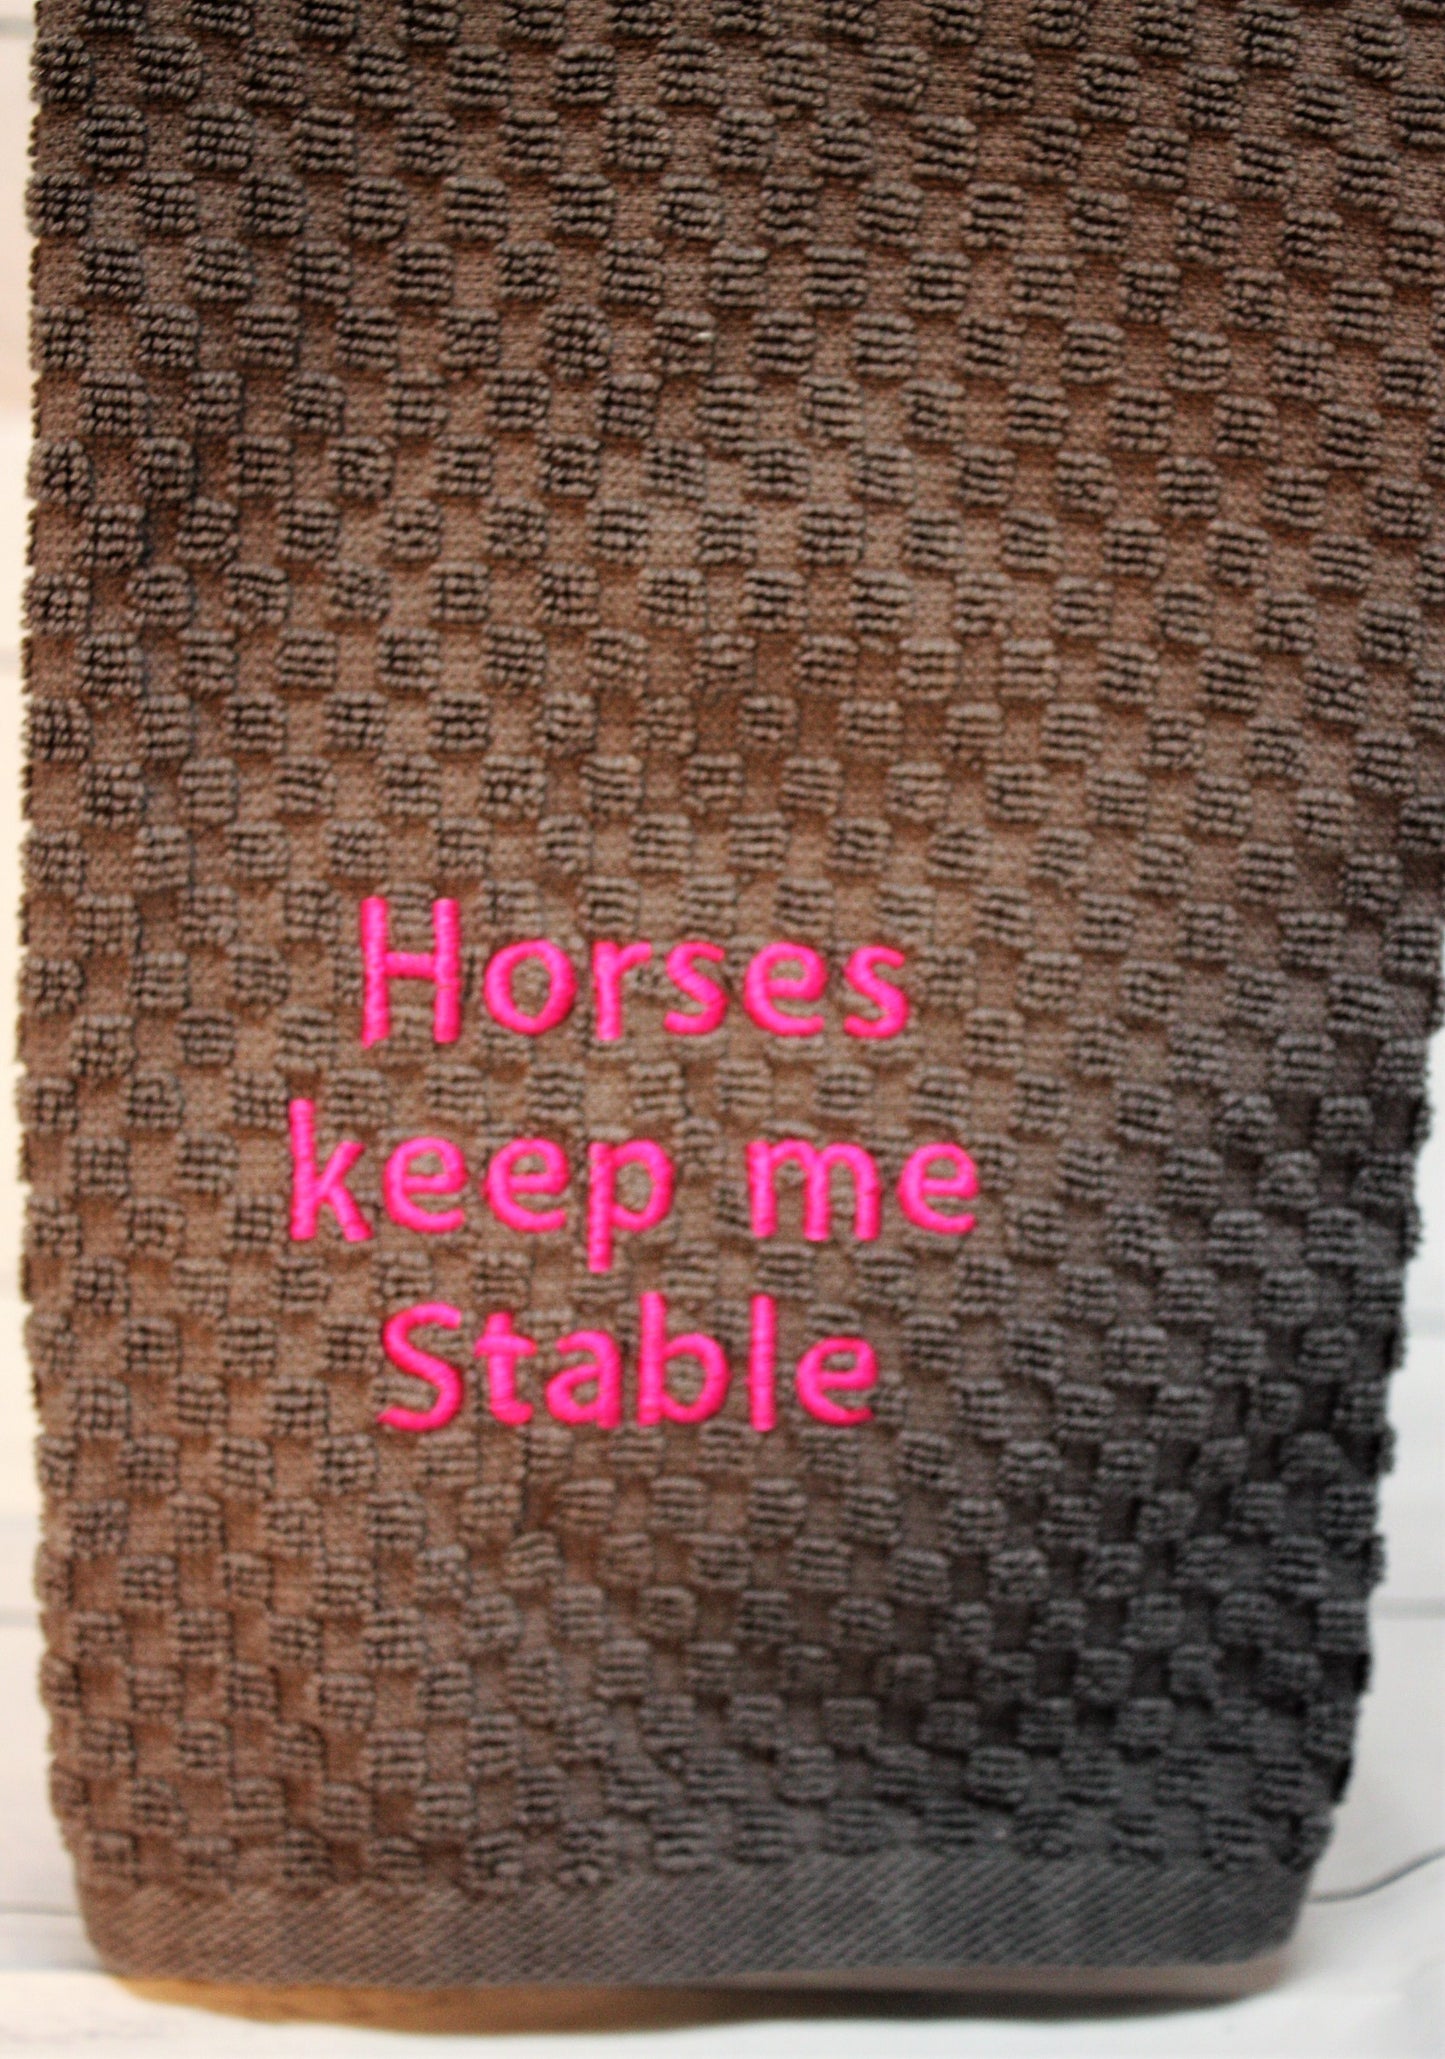 Horses Keep me Stable Towel